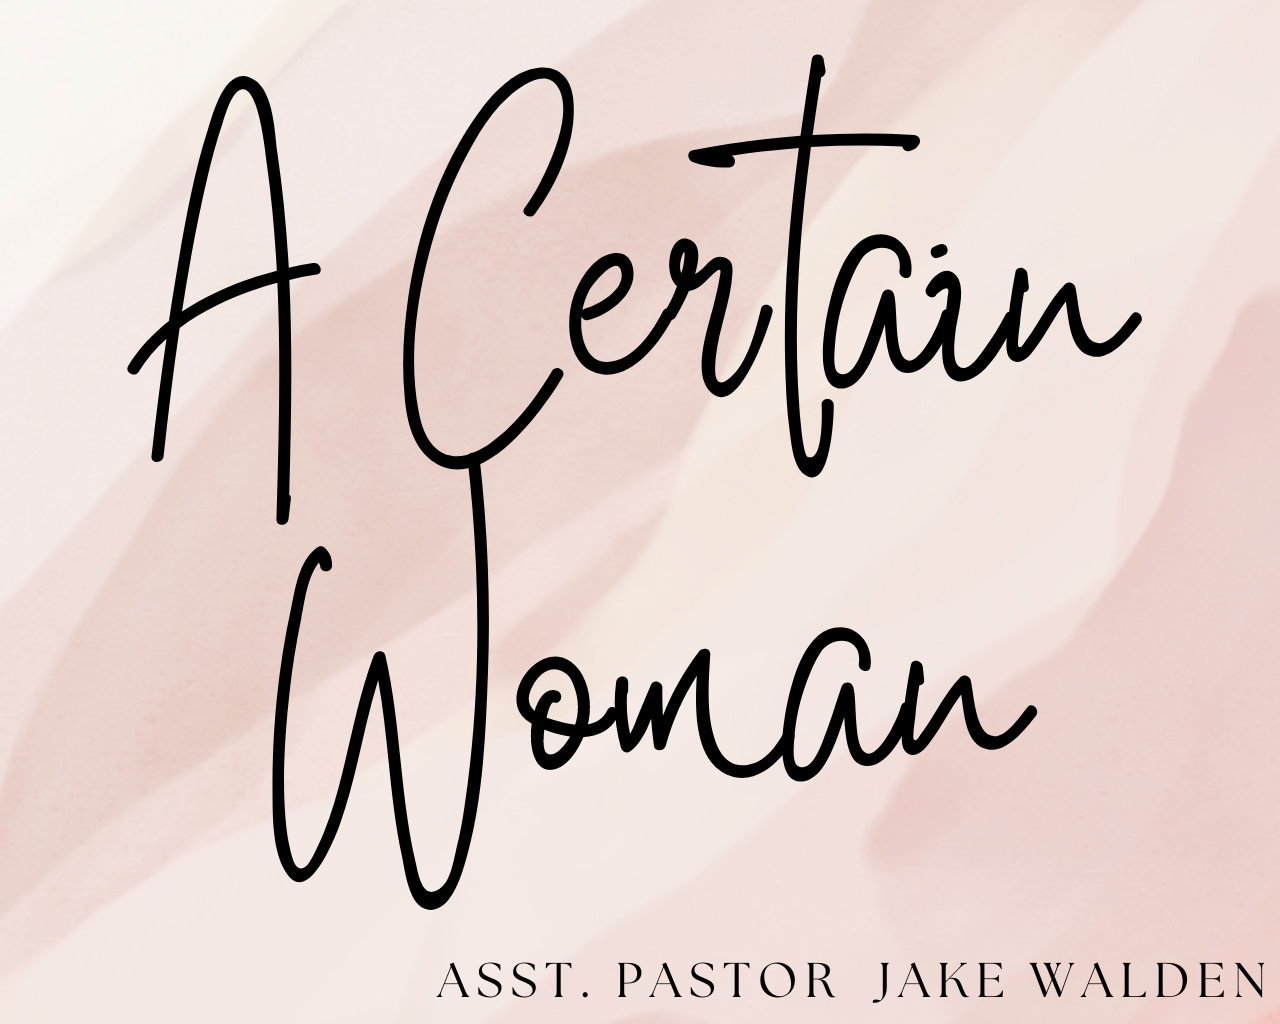 A Certain Woman